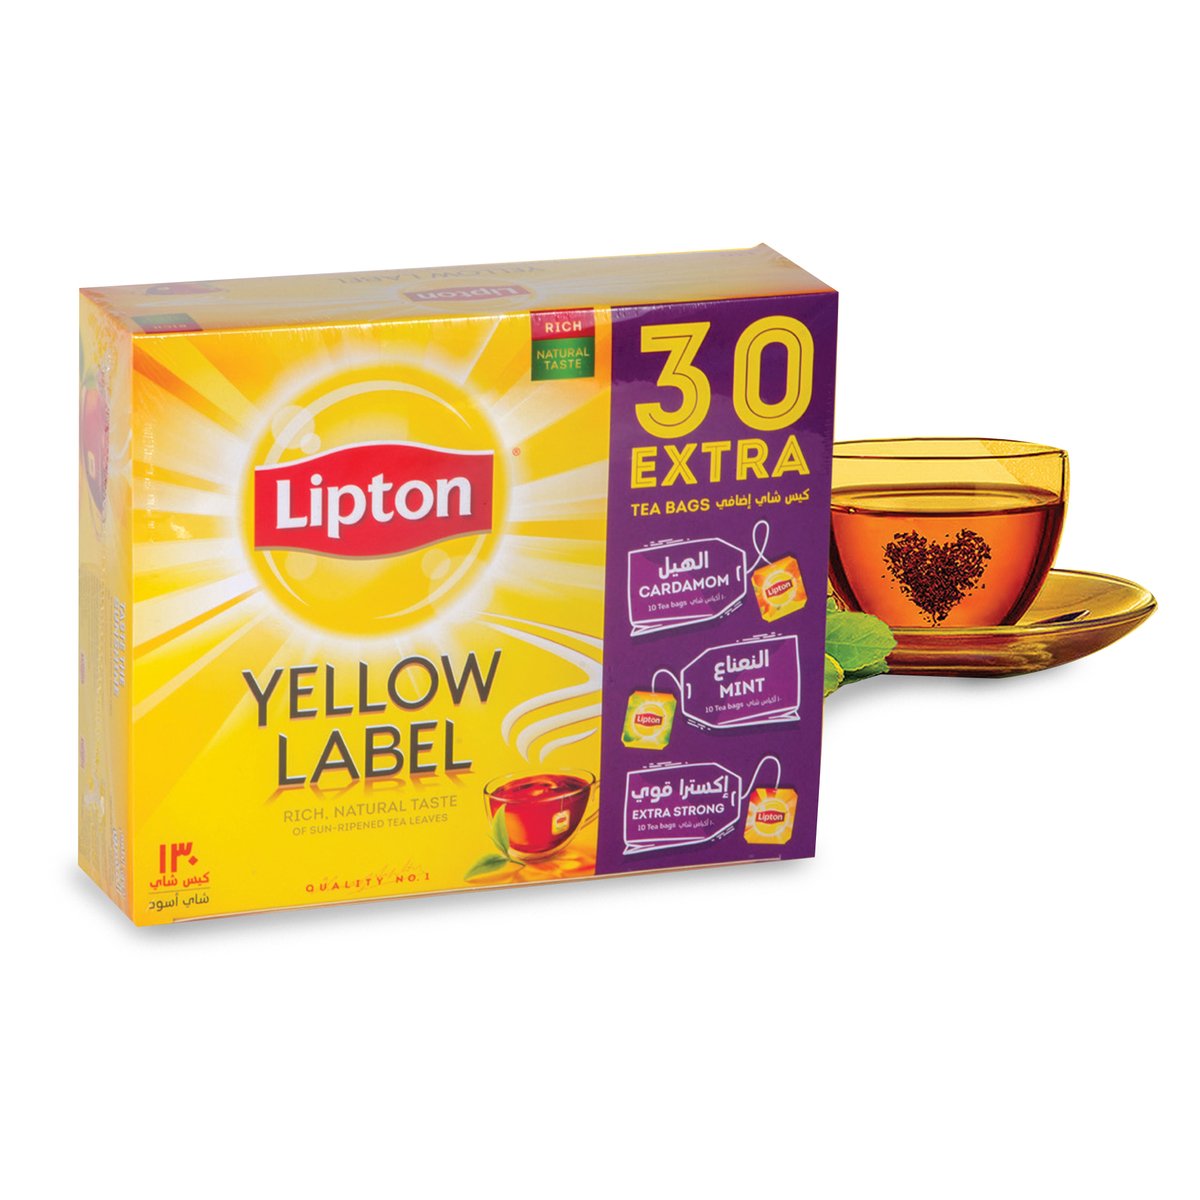 Lipton Teabags 100 pcs + 30 pcs